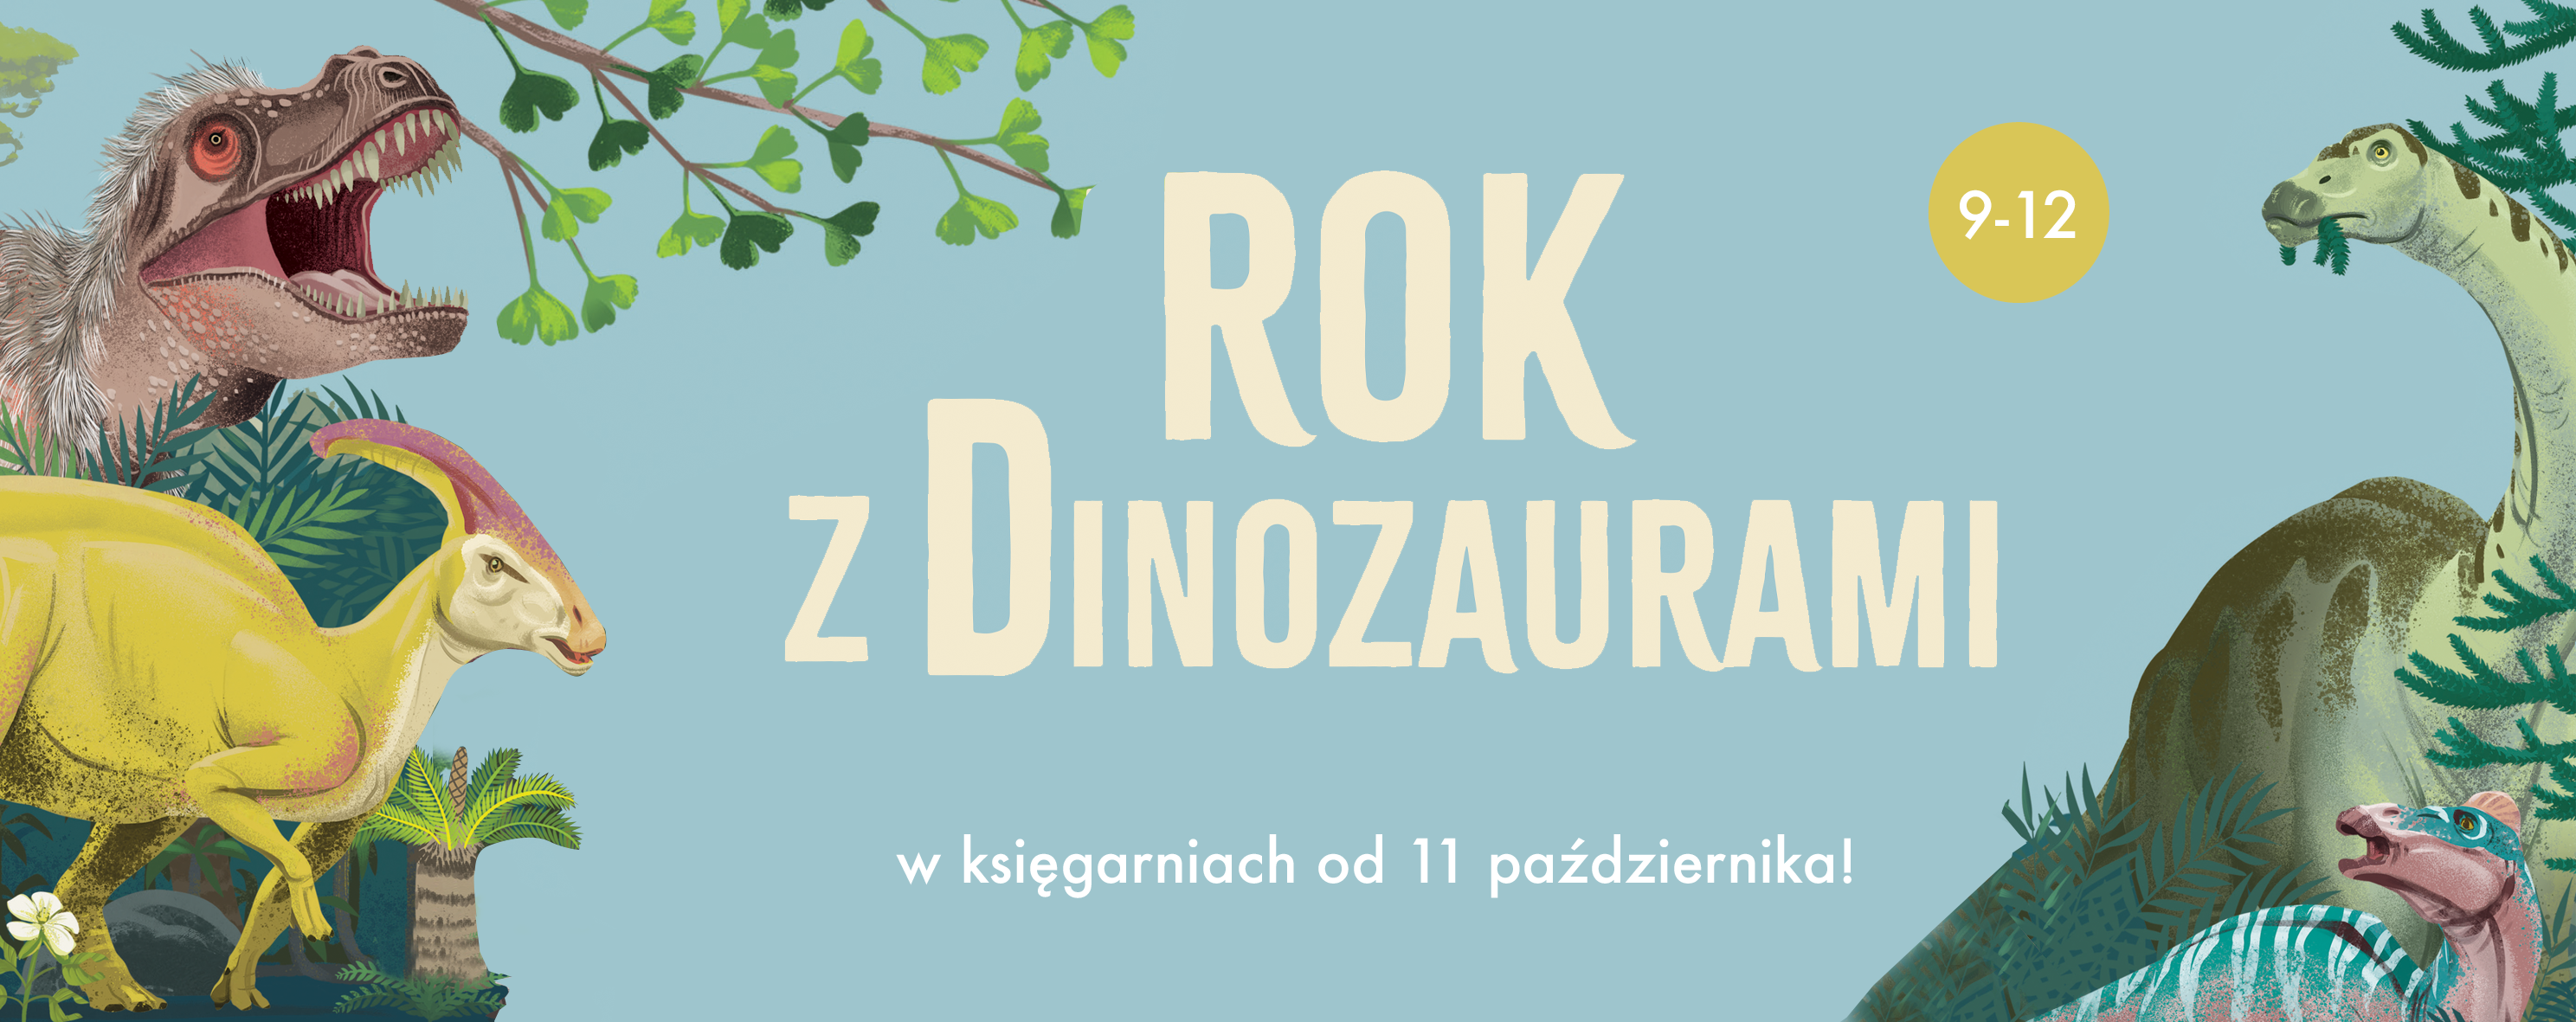 slajder_rok_z_dinozaurami.png